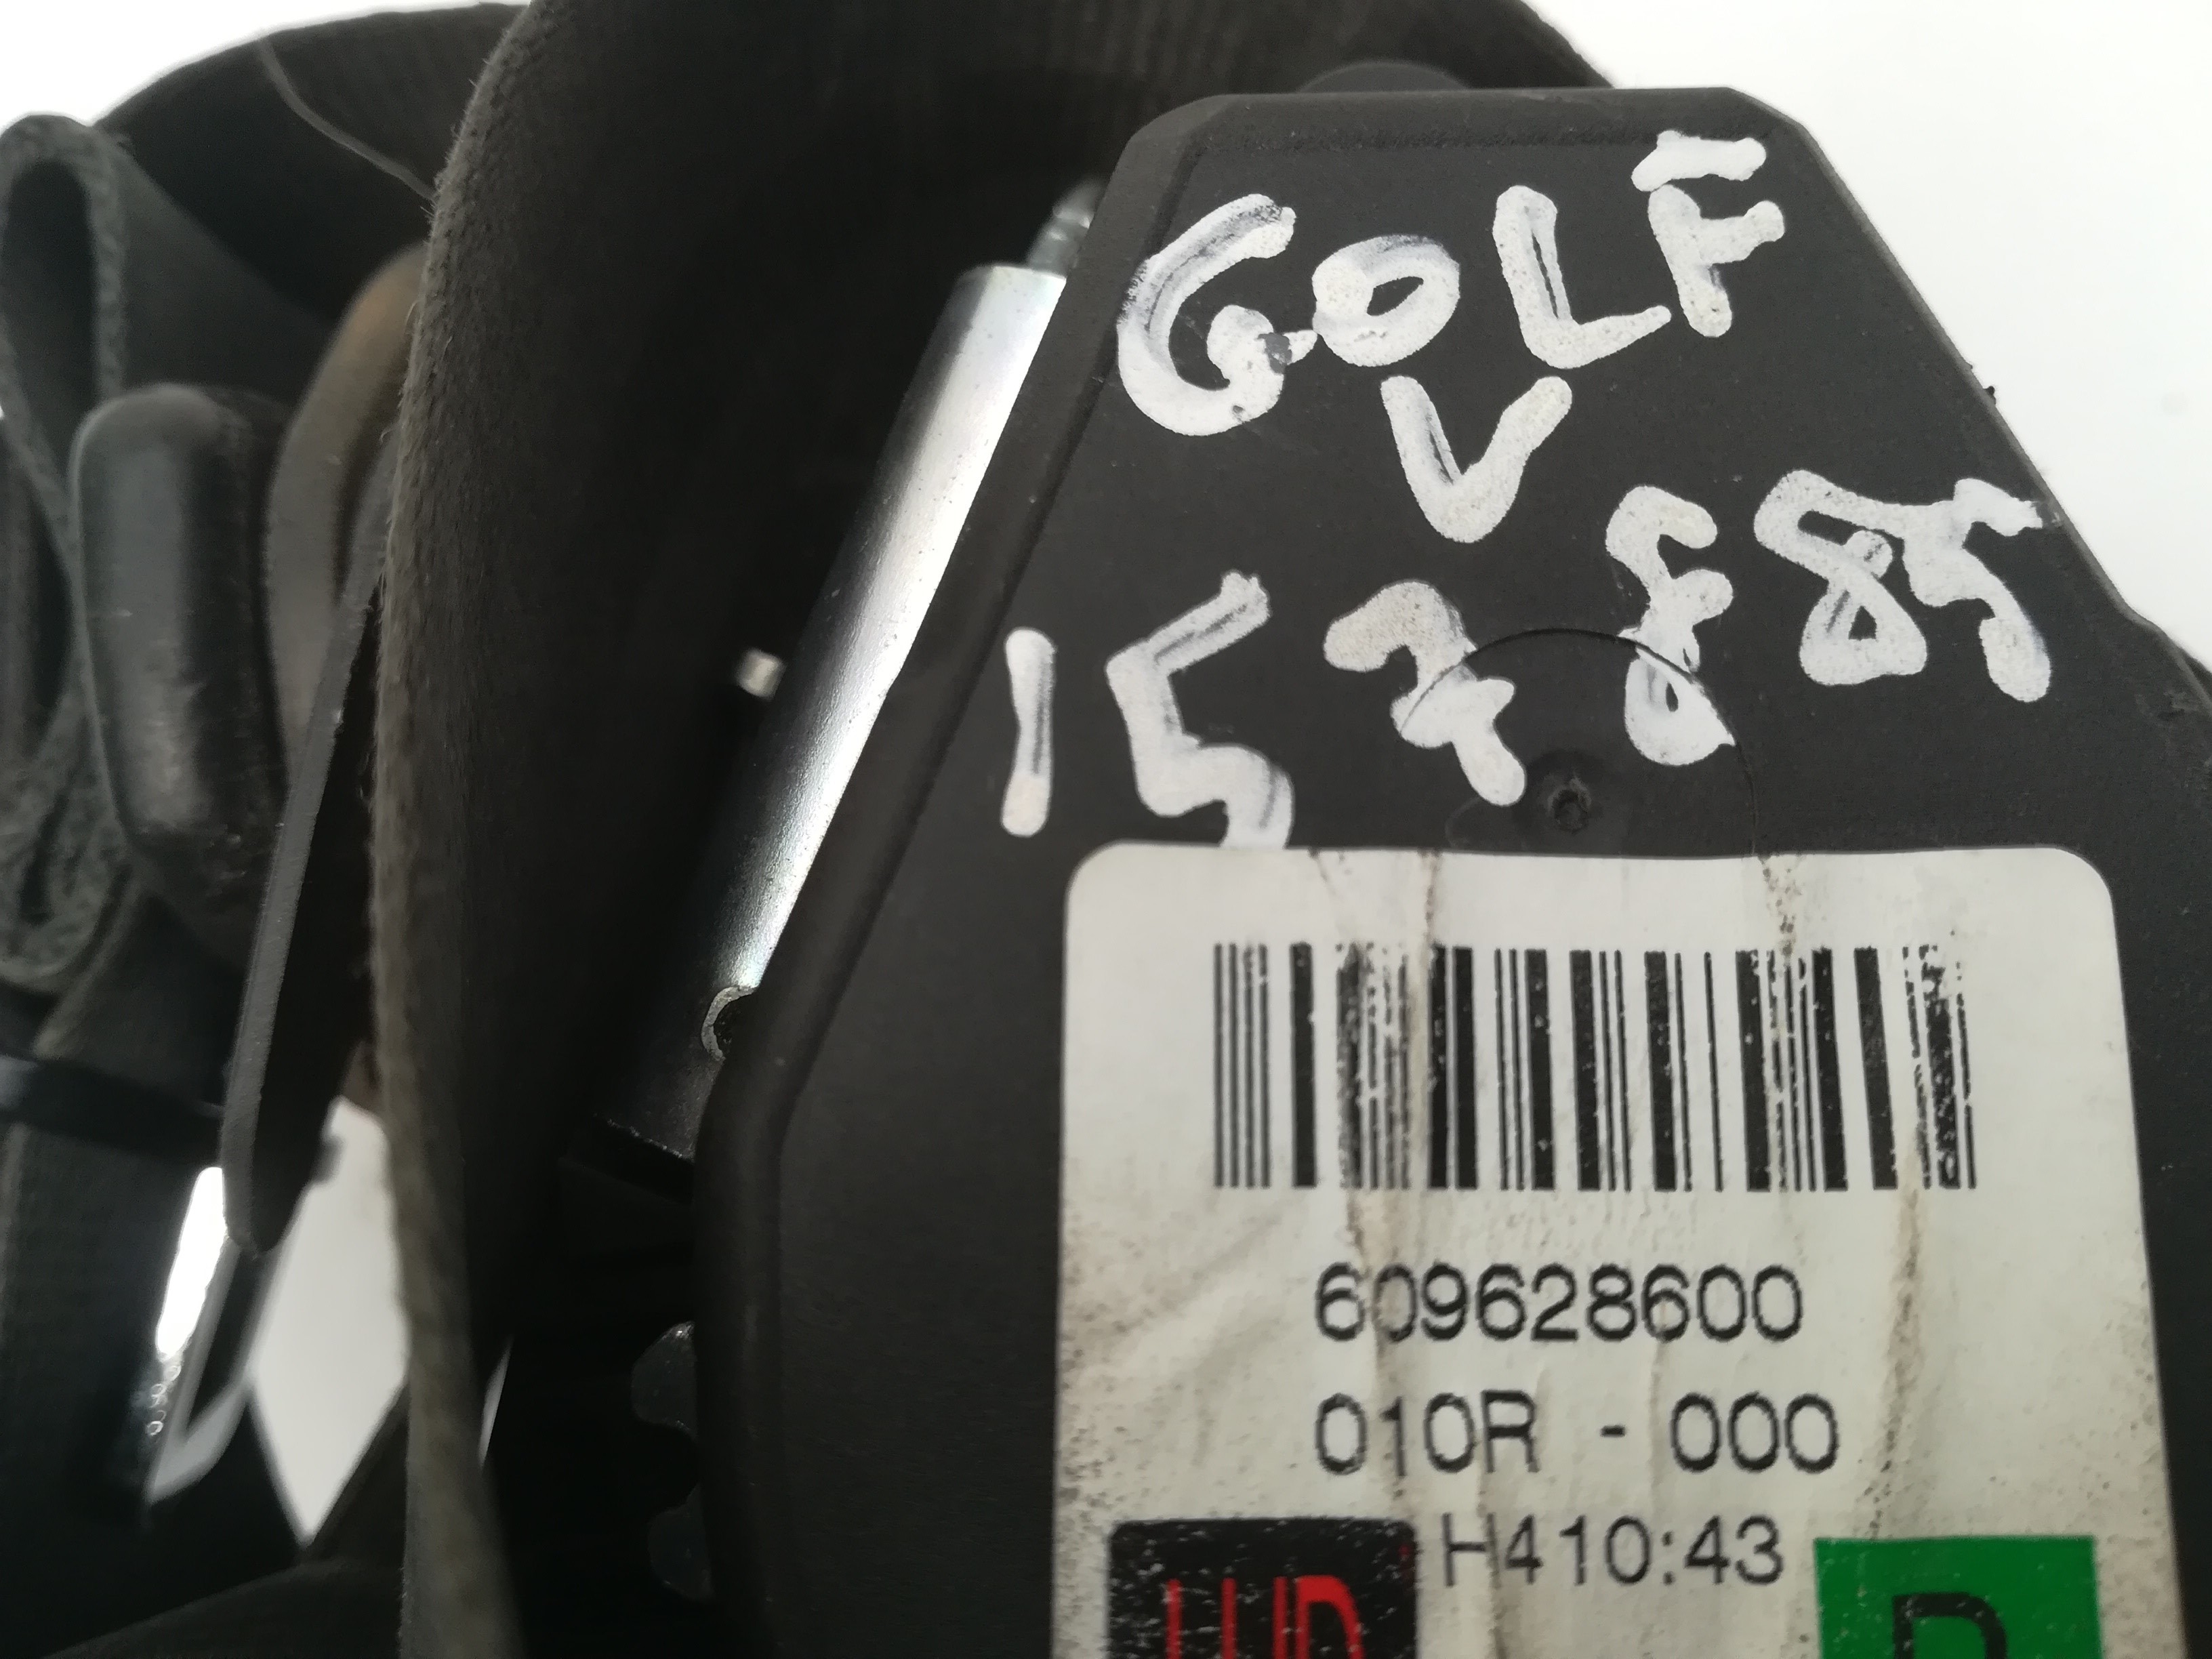 VOLKSWAGEN Golf 5 generation (2003-2009) Priekinis dešinys saugos diržas 1K4857706BA, 609628600 24015367